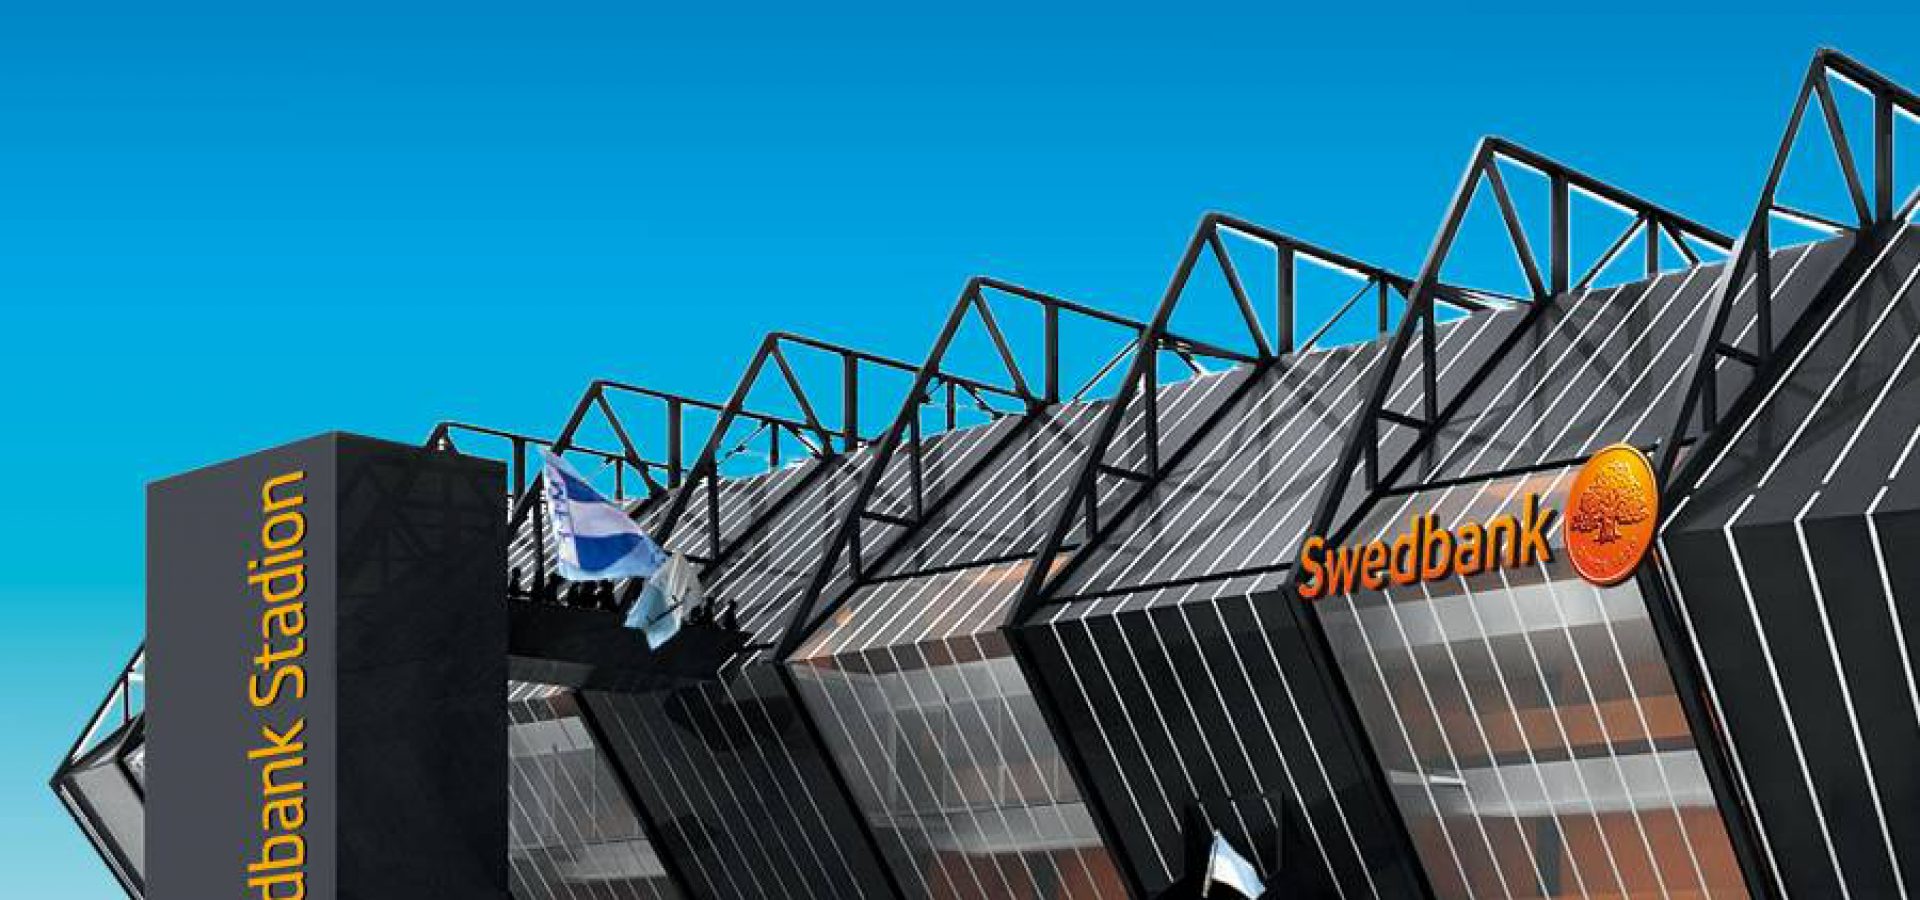 swedbank_stadion